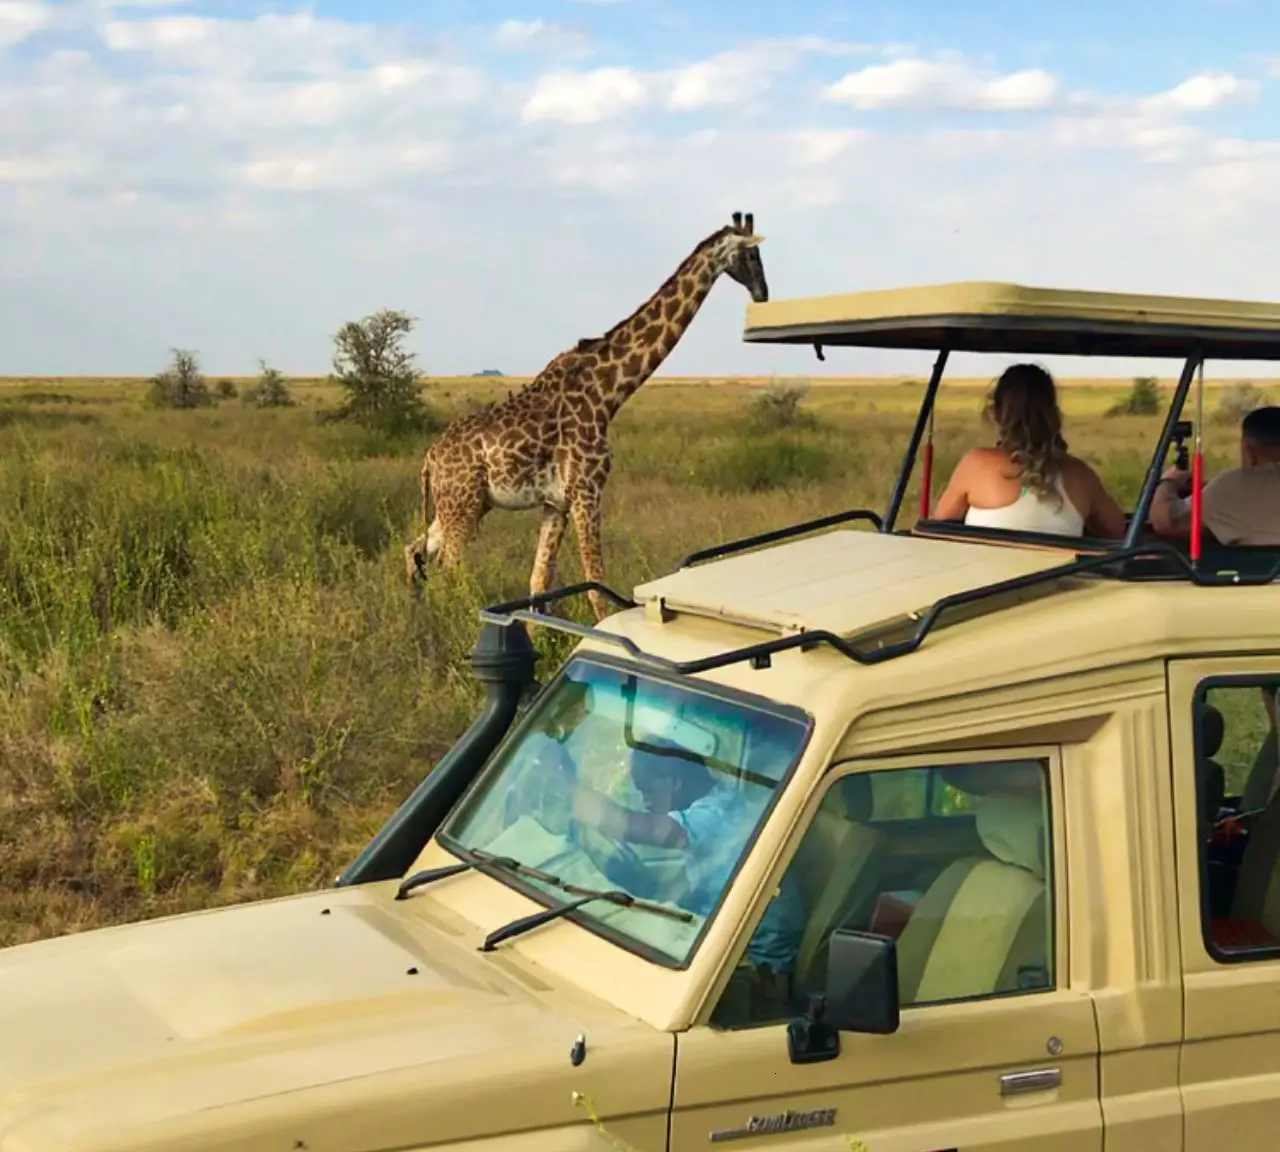 Land Cruiser next to the giraffes, Serengeti National Park, Tanzania - Experiencing the Globe